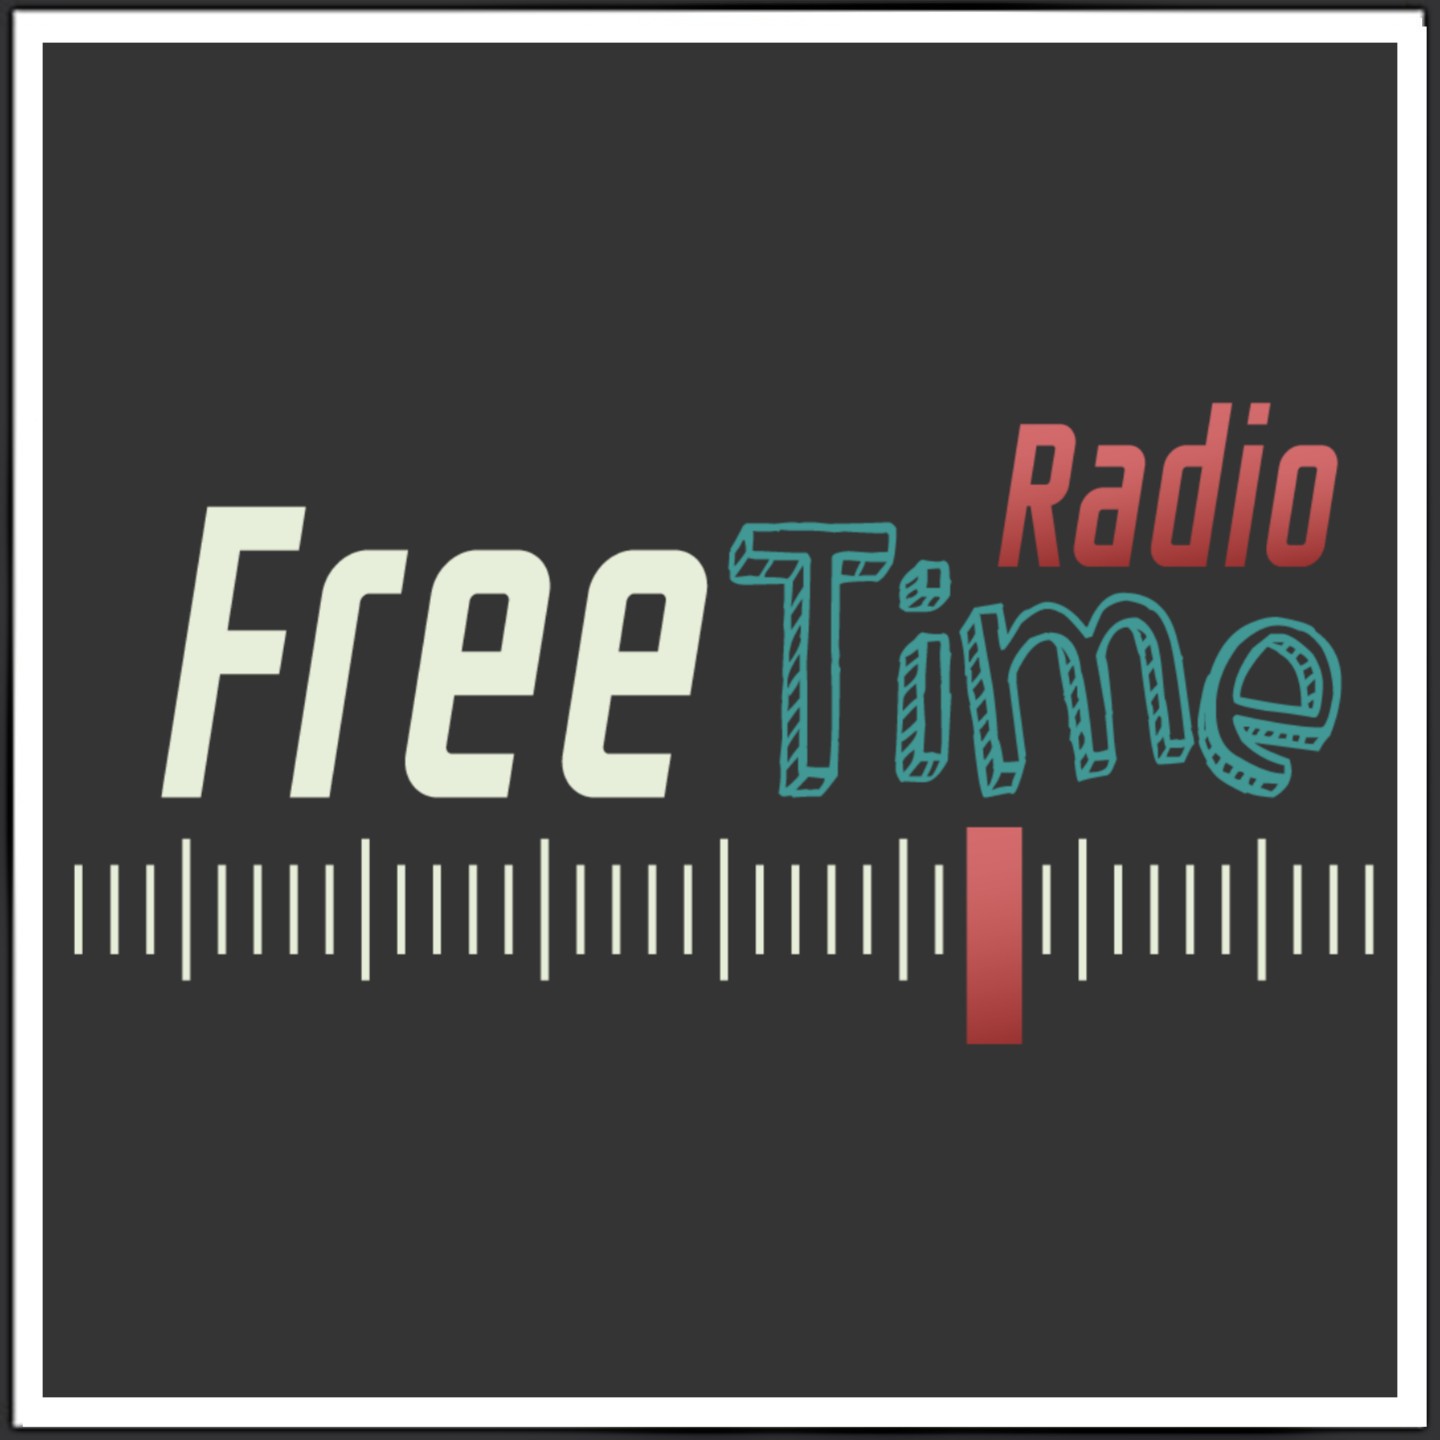 FREE TIME RADIO